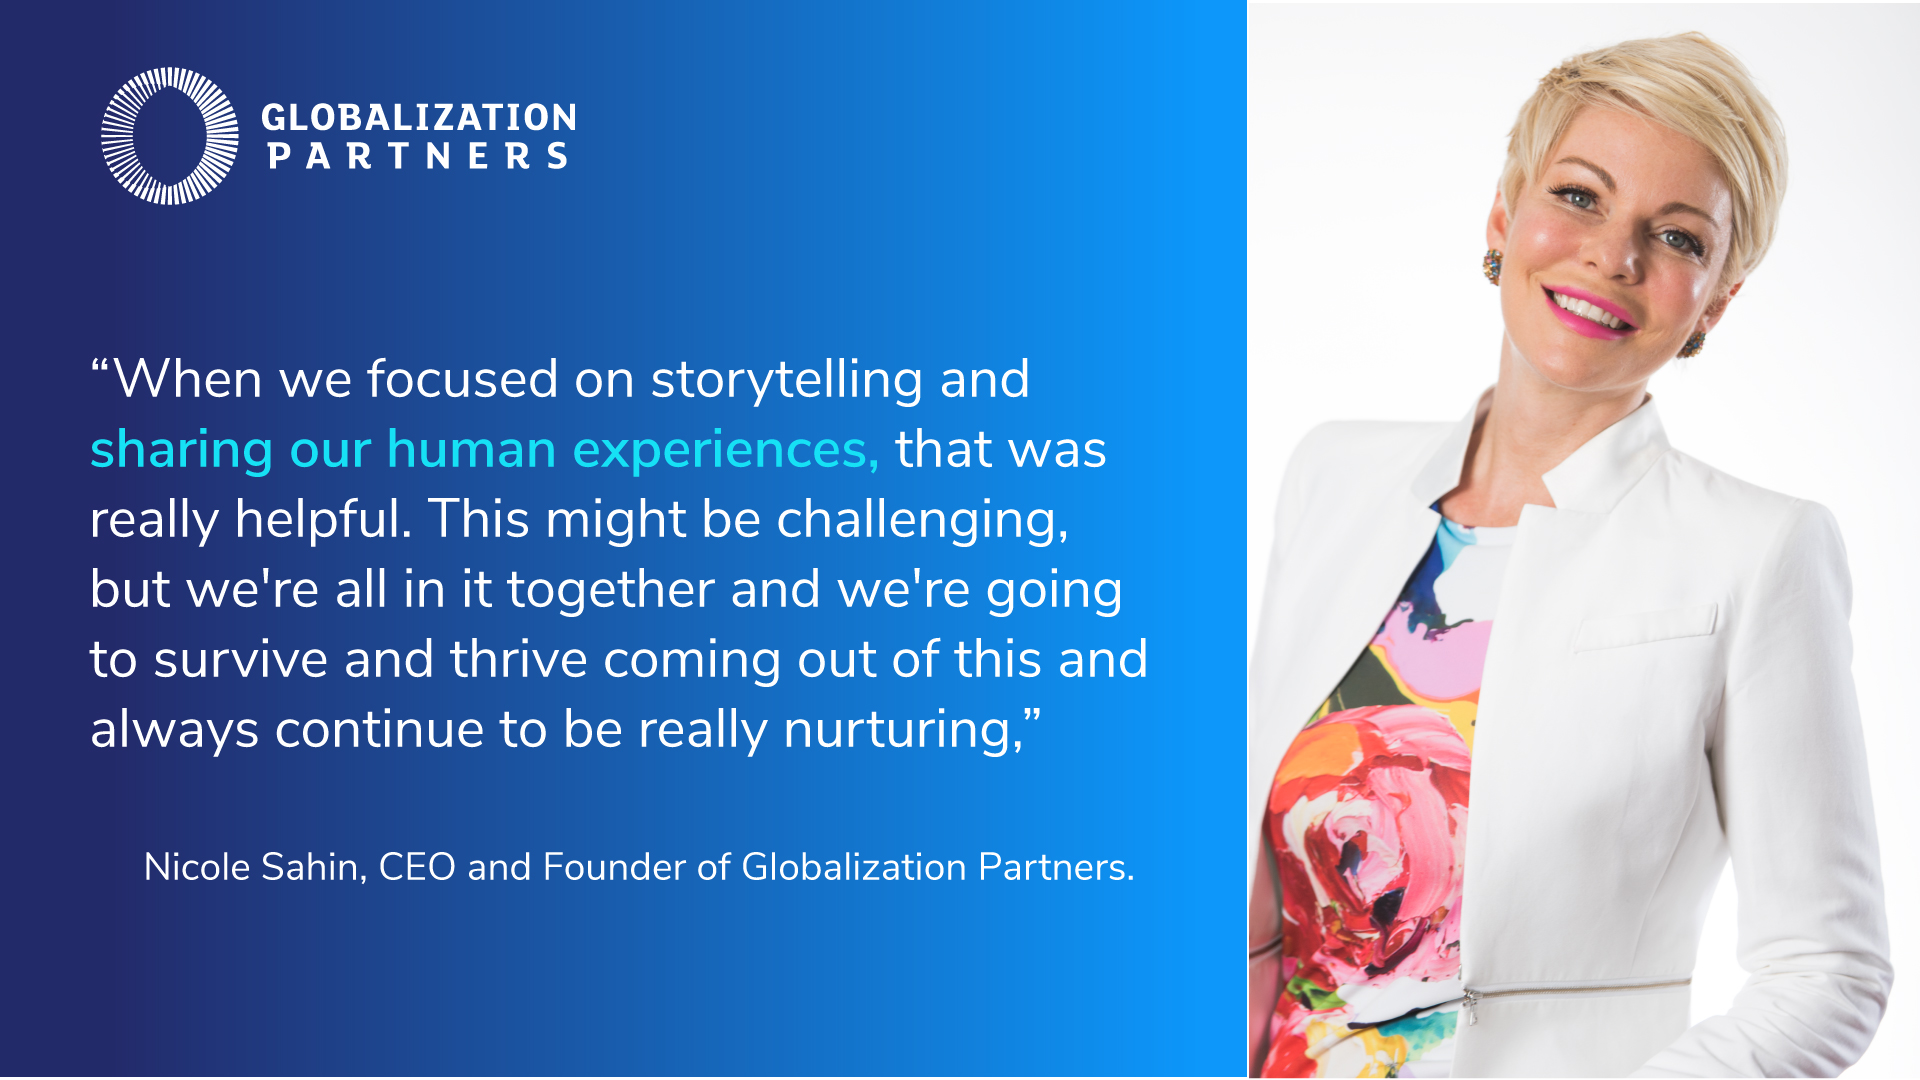 Nicole Sahin, CEO of Globalization Partners